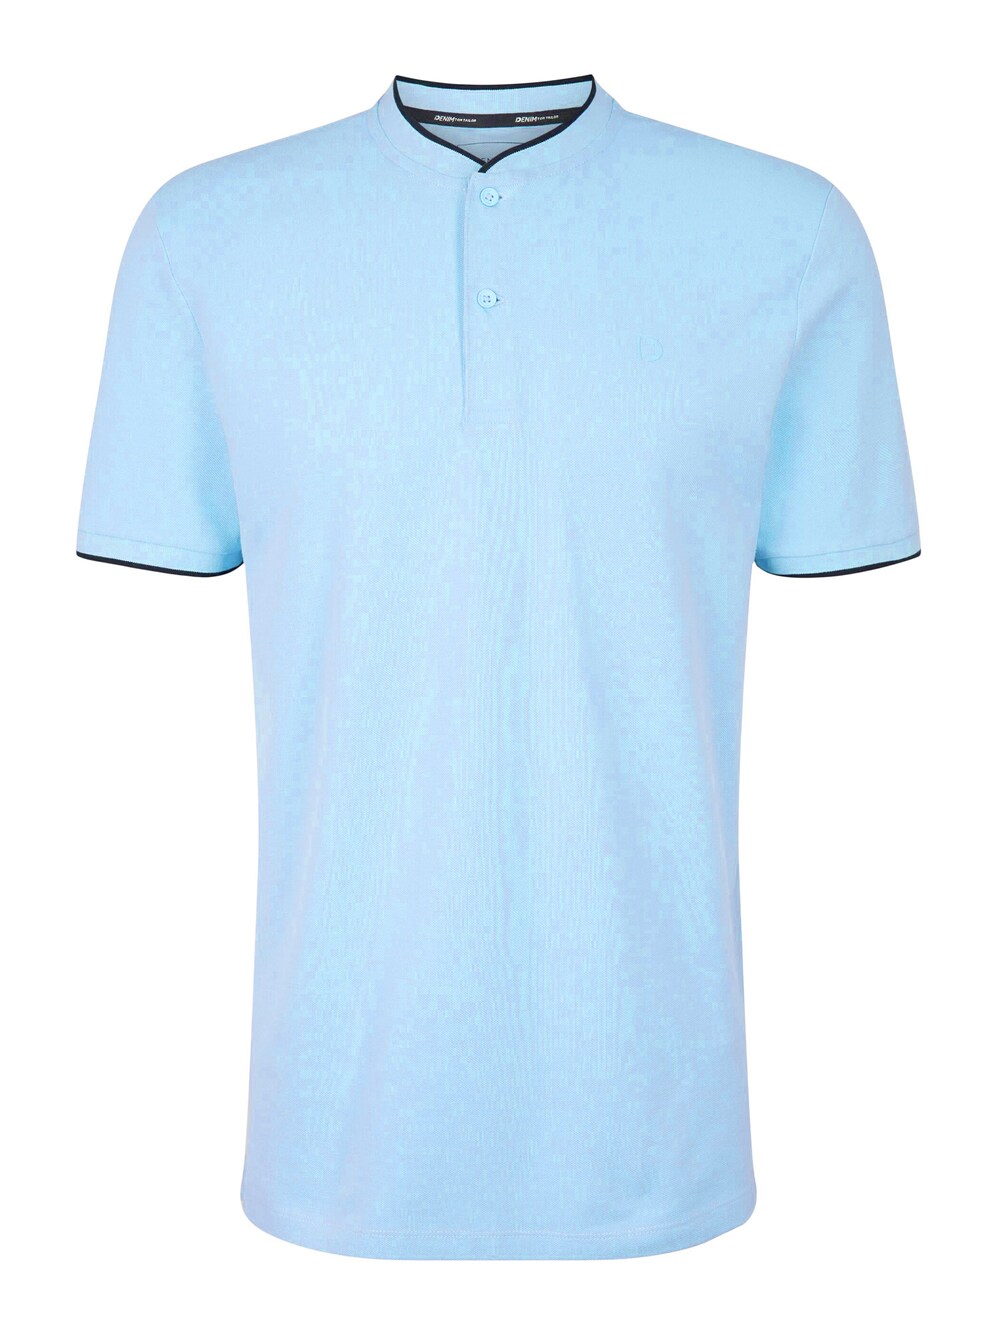 Футболка TOM TAILOR DENIM, темно-синий/светло-голубой футболка tom tailor размер xl голубой